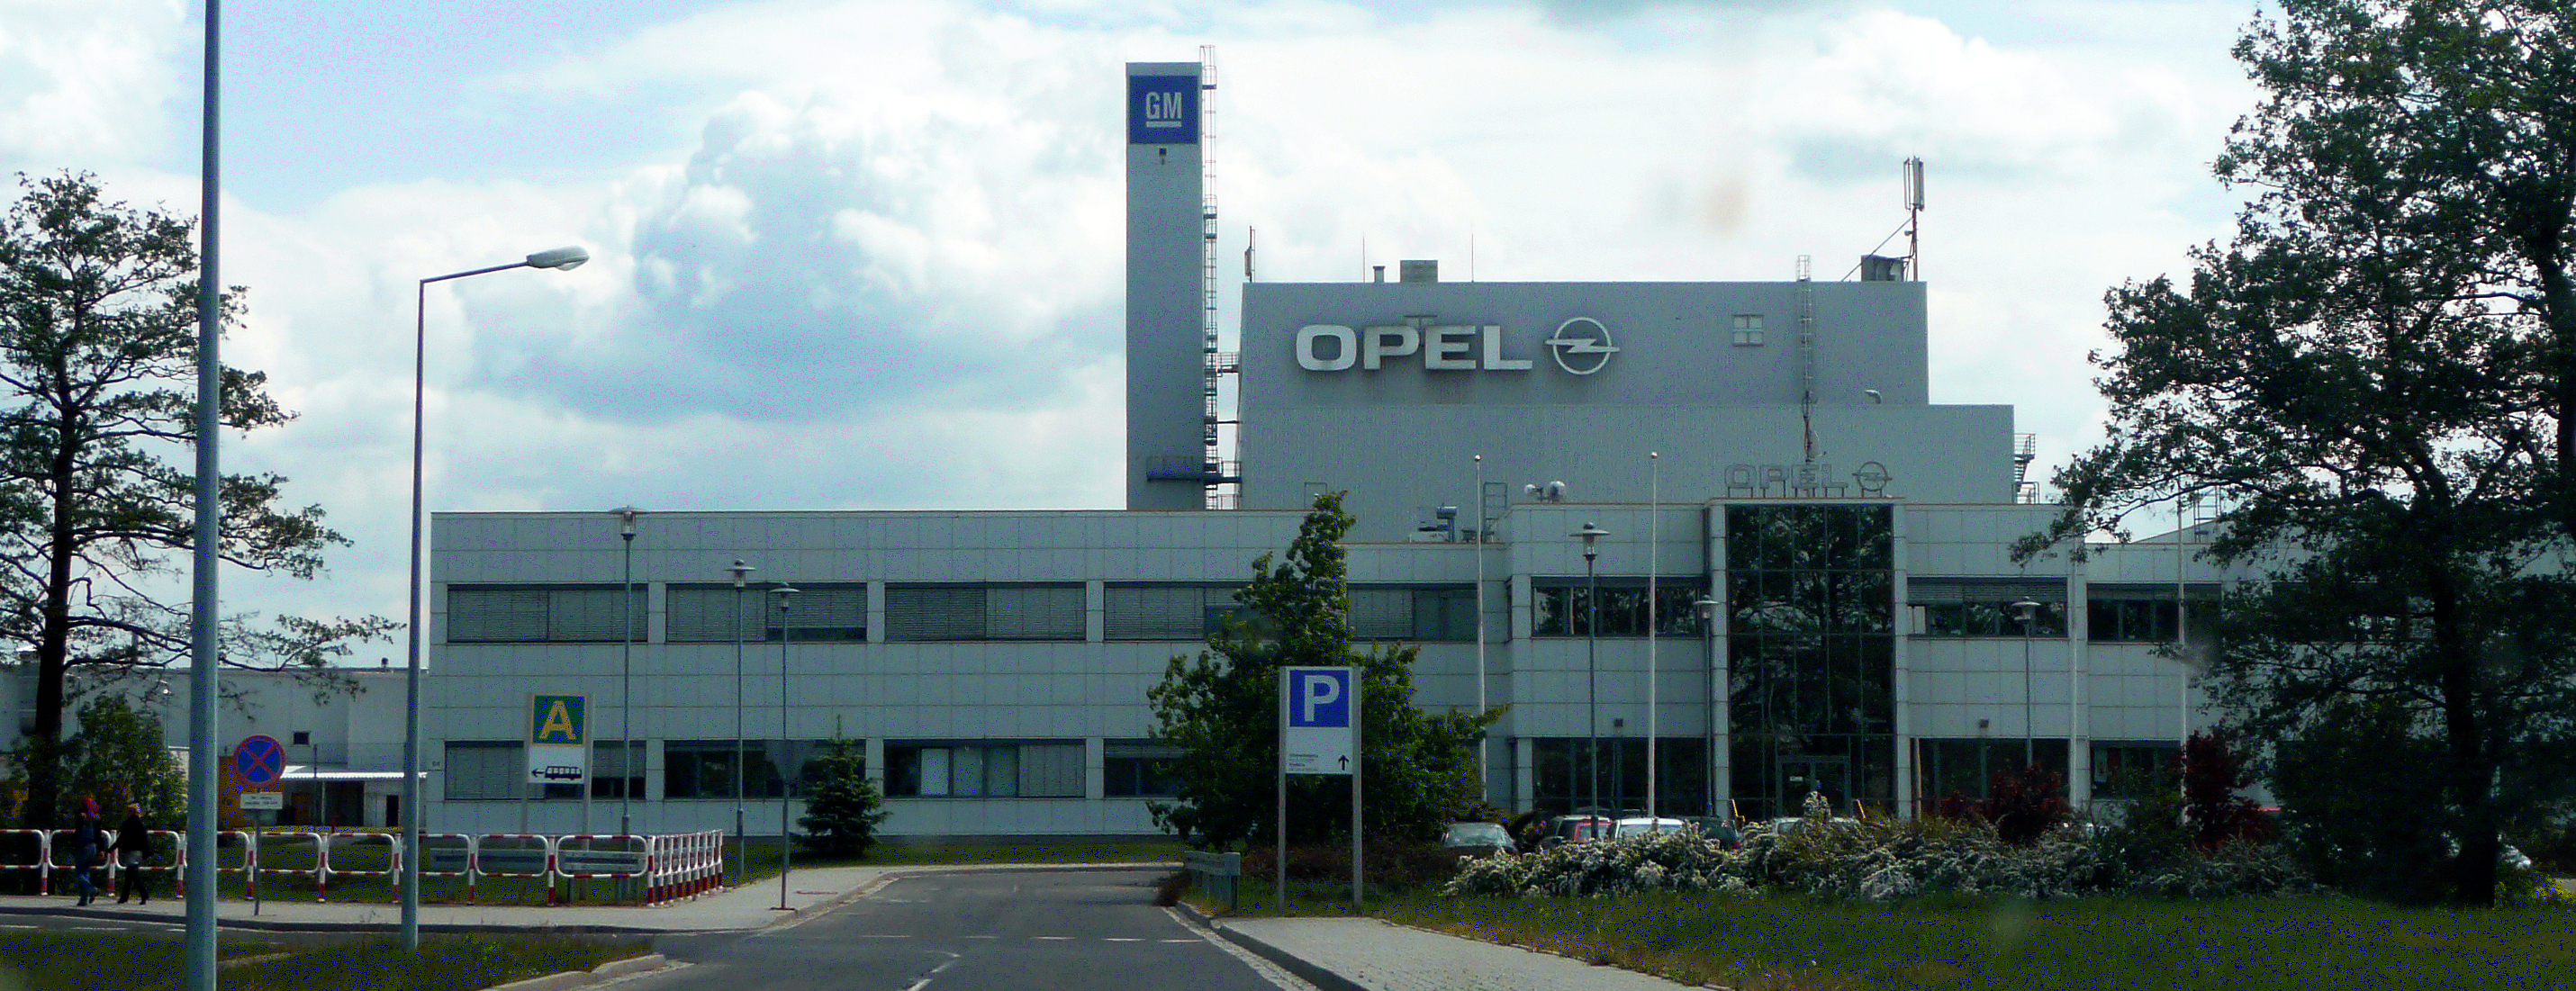 Opel_Gliwice